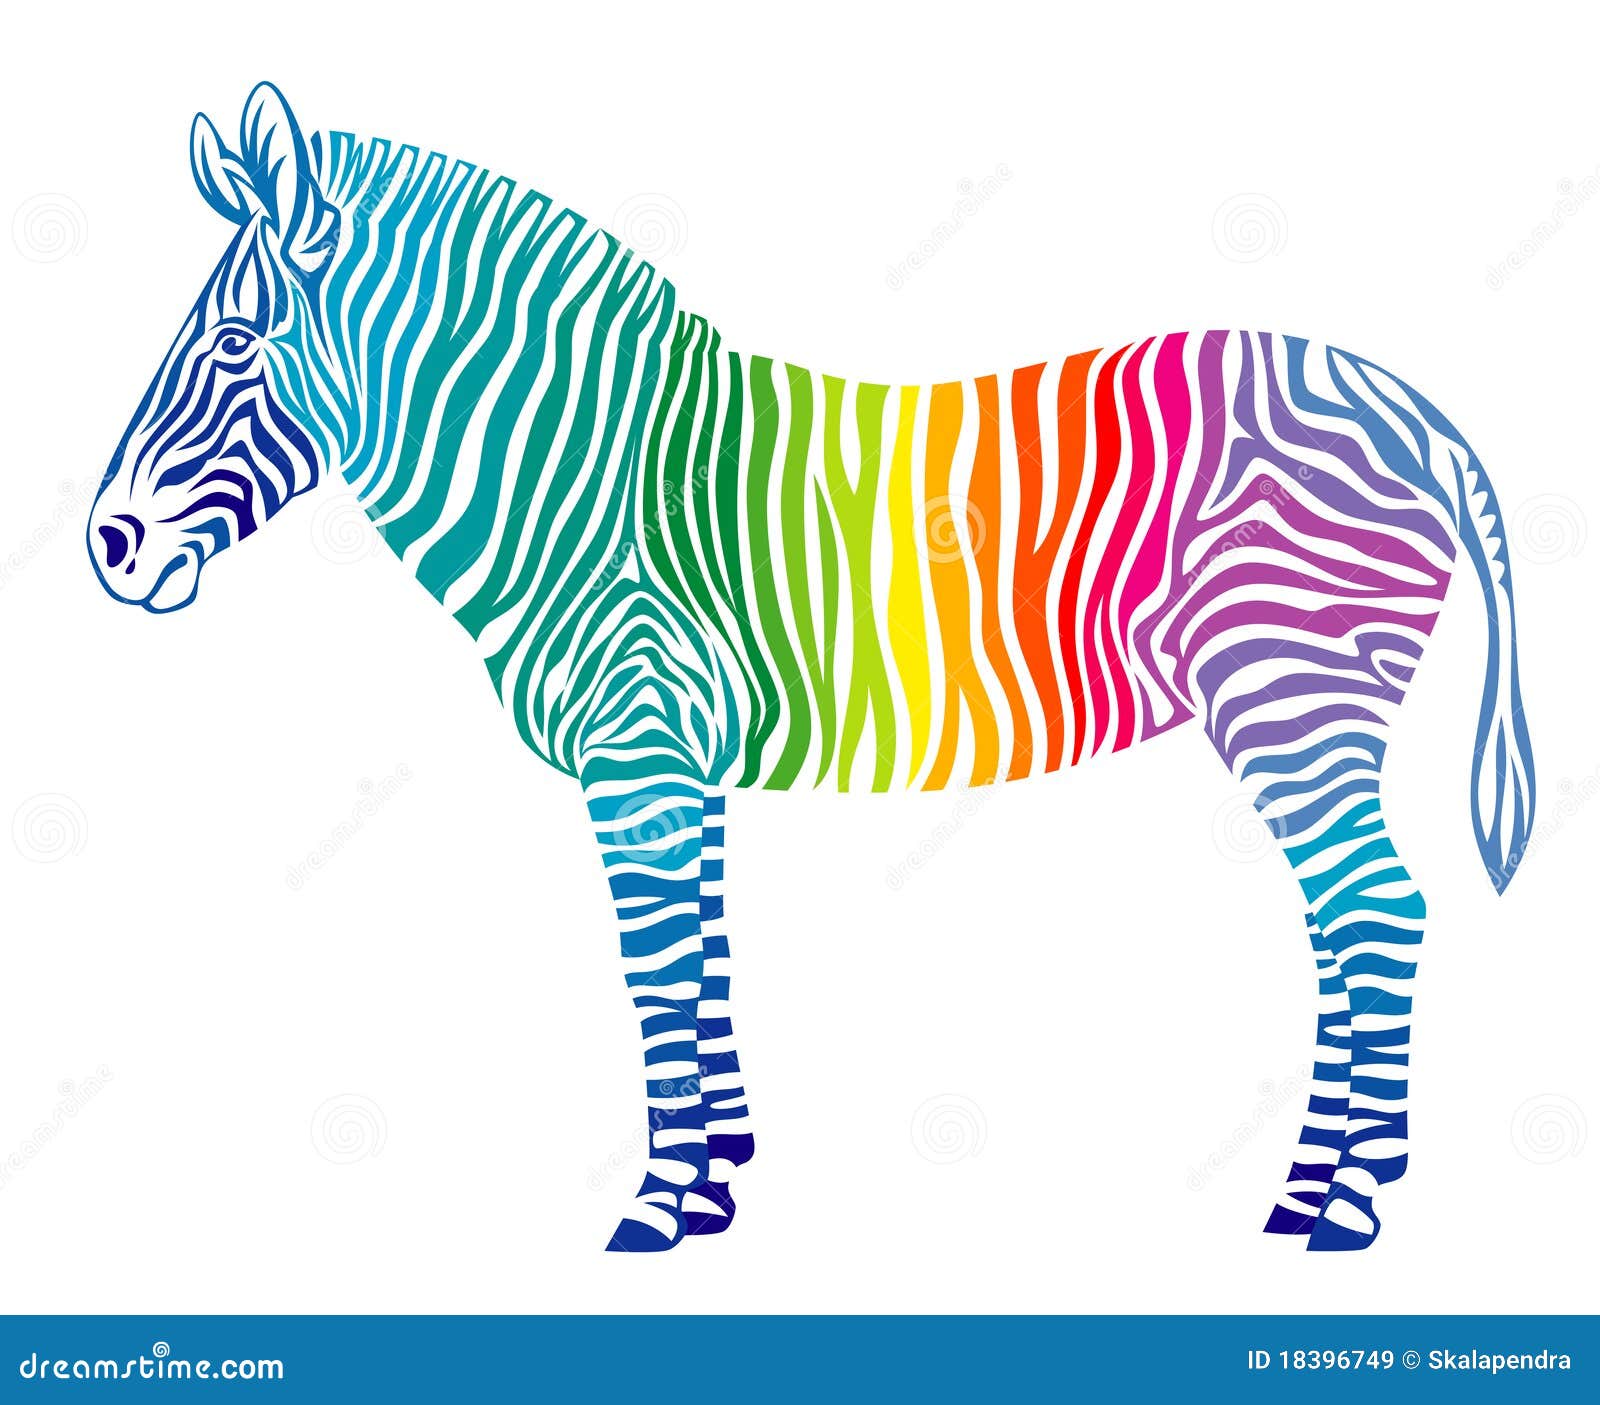 Rainbow zebra stock vector. Illustration of contrast - 18396749